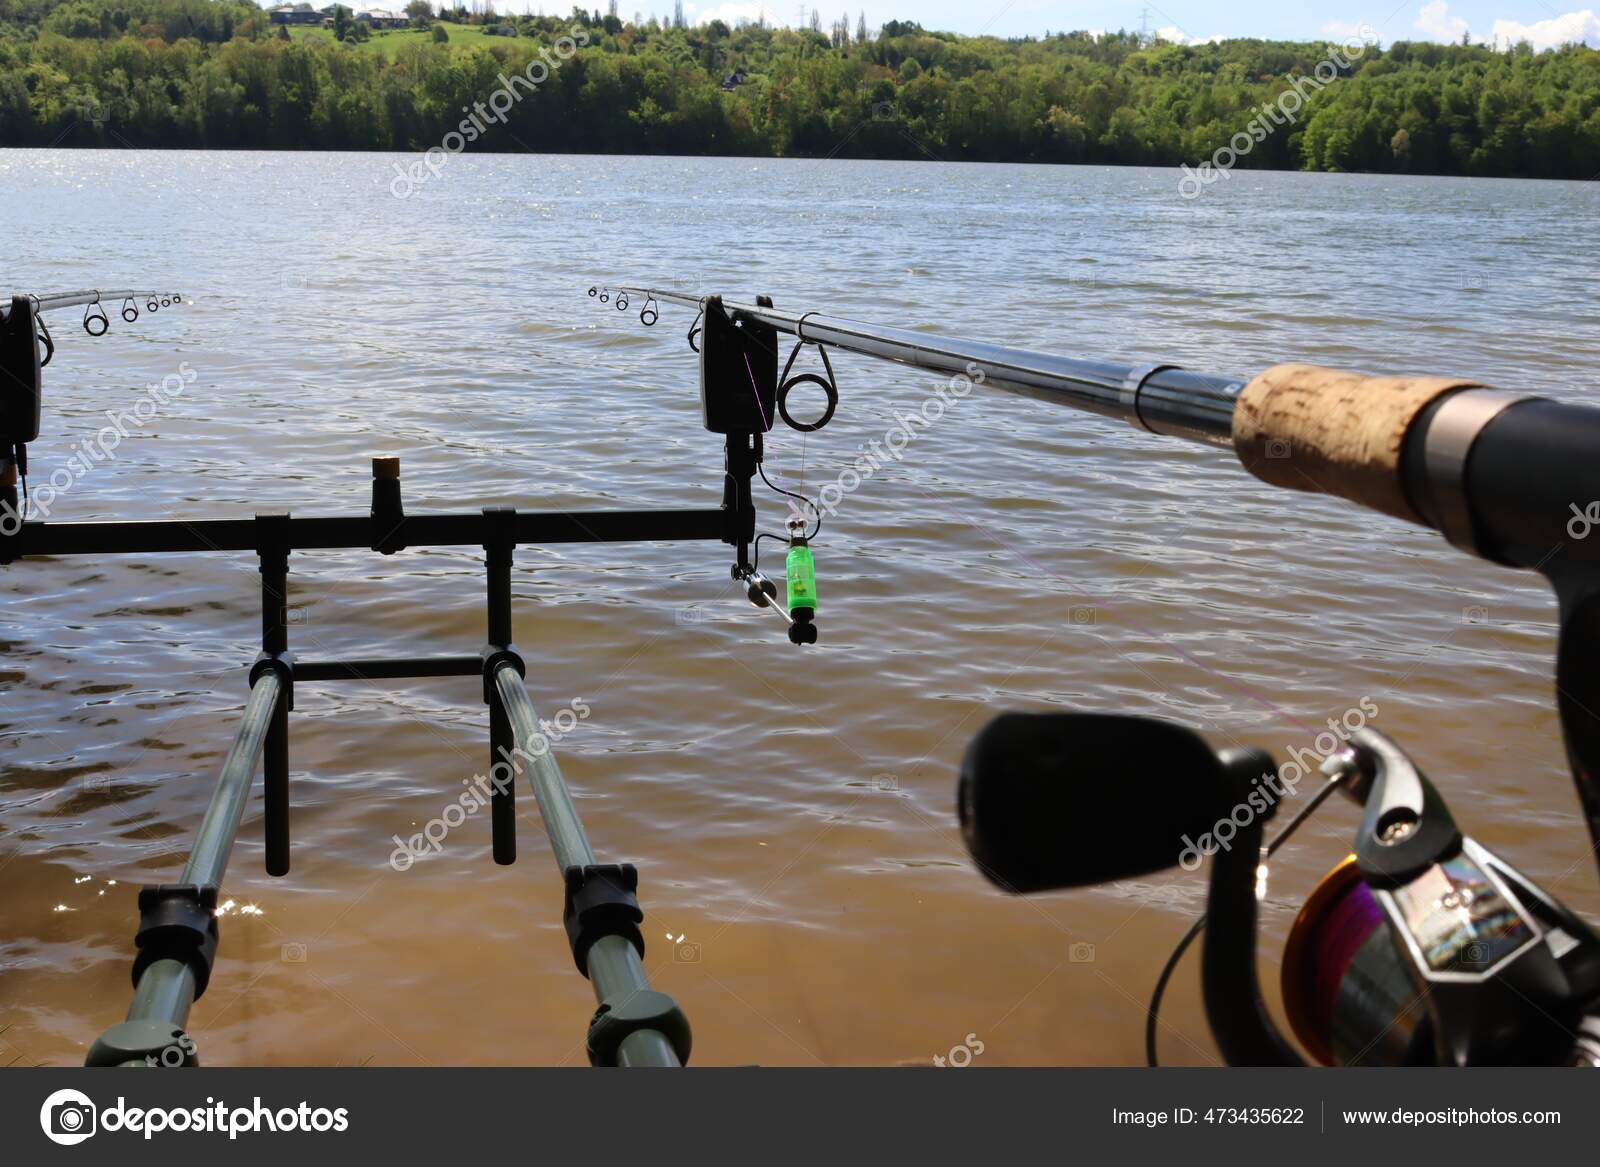 https://st2.depositphotos.com/42654780/47343/i/1600/depositphotos_473435622-stock-photo-carp-fishing-indicator-warning-fishing.jpg